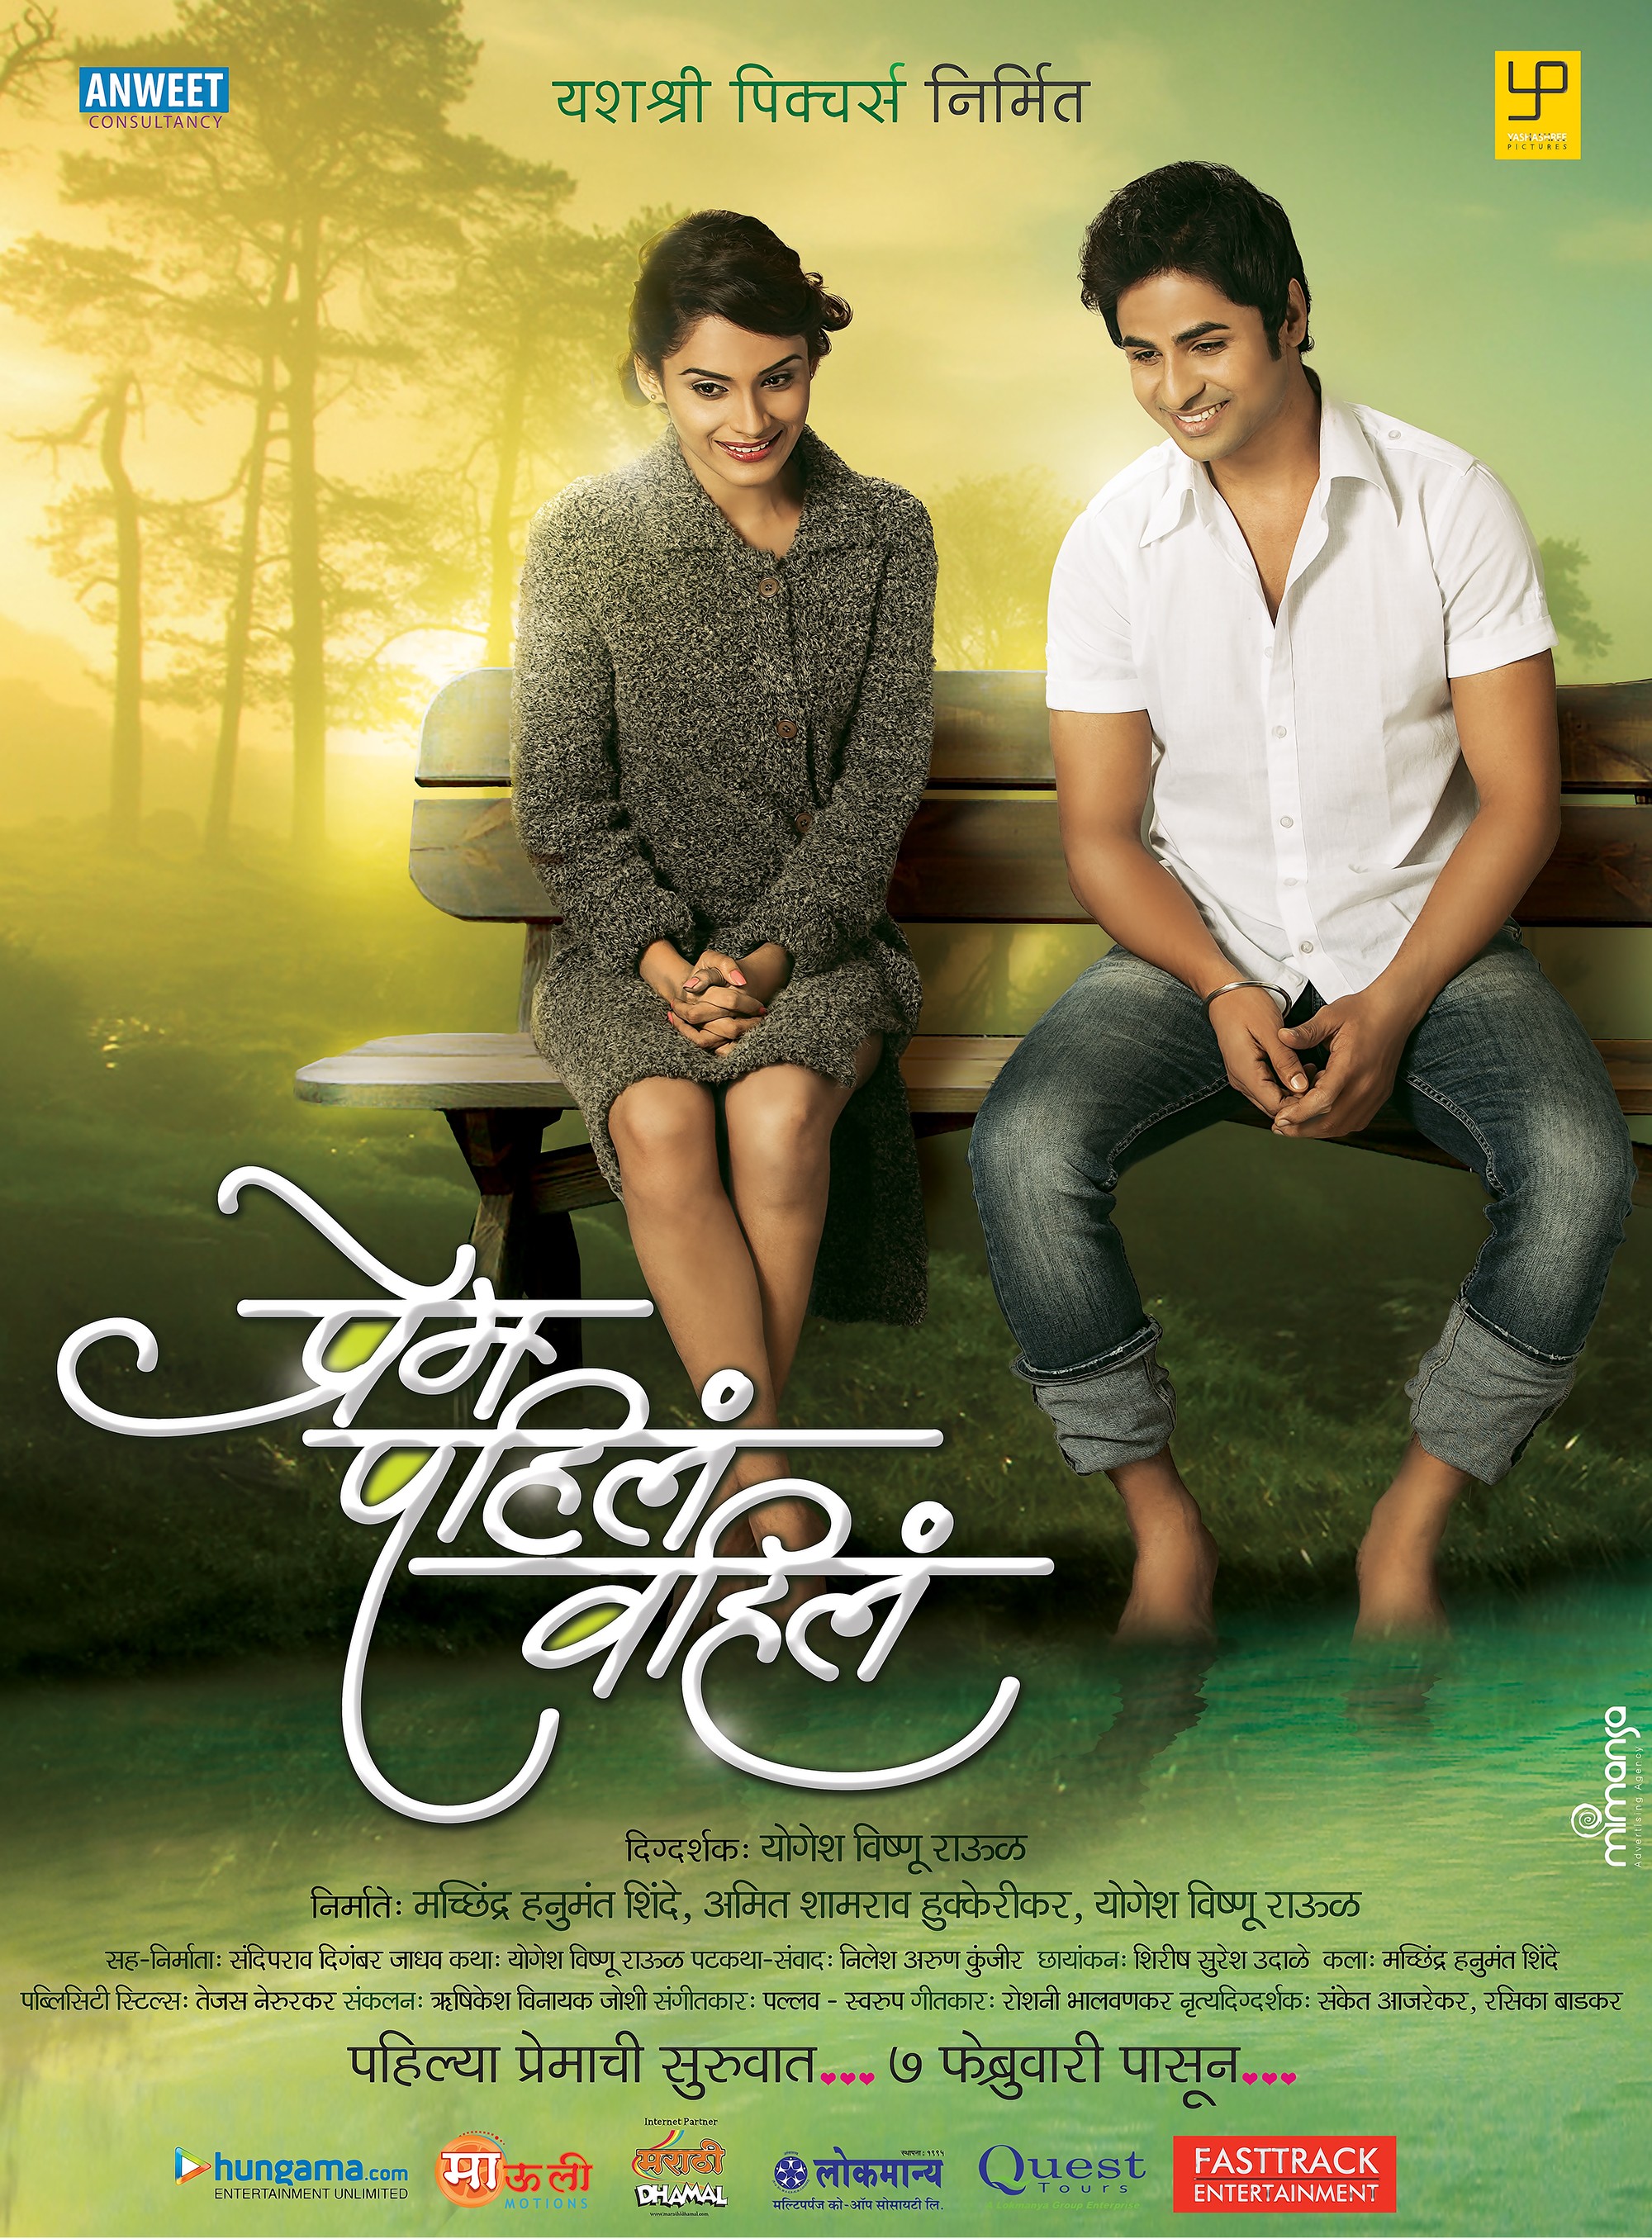 Mega Sized Movie Poster Image for Prem Pahil Vahil (#2 of 2)